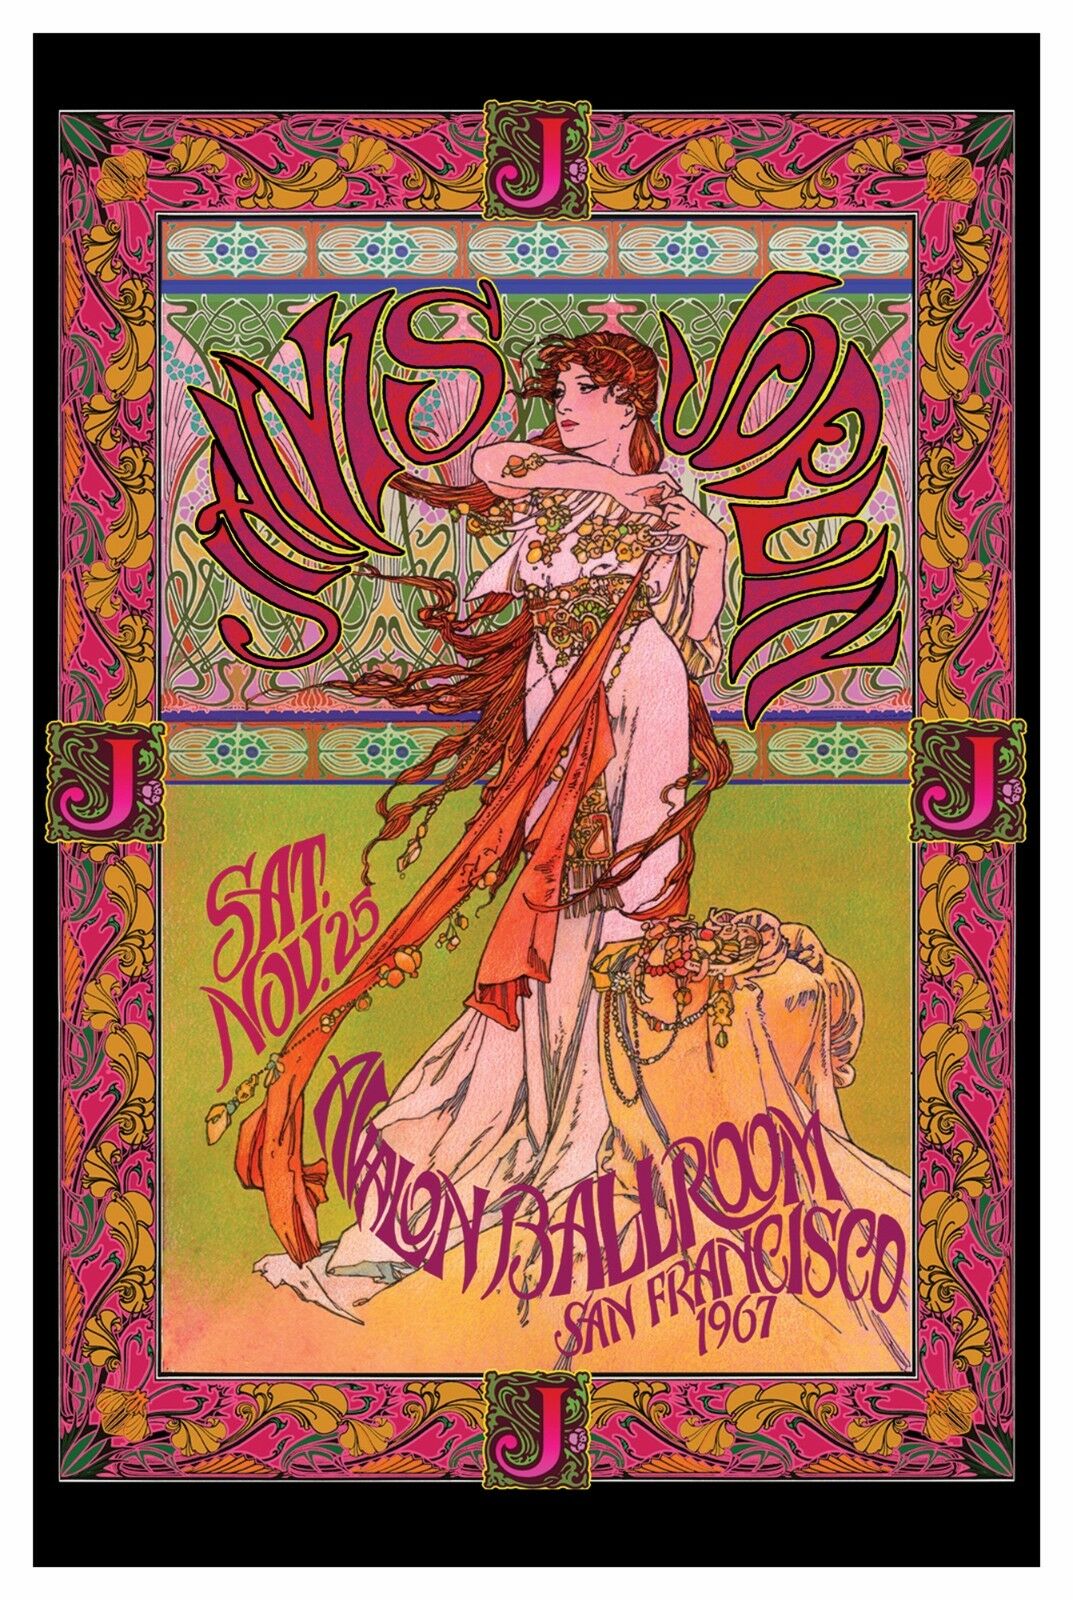 Janis Joplin - Masse Concert Poster - 24x36 Classic Rock Art 241371